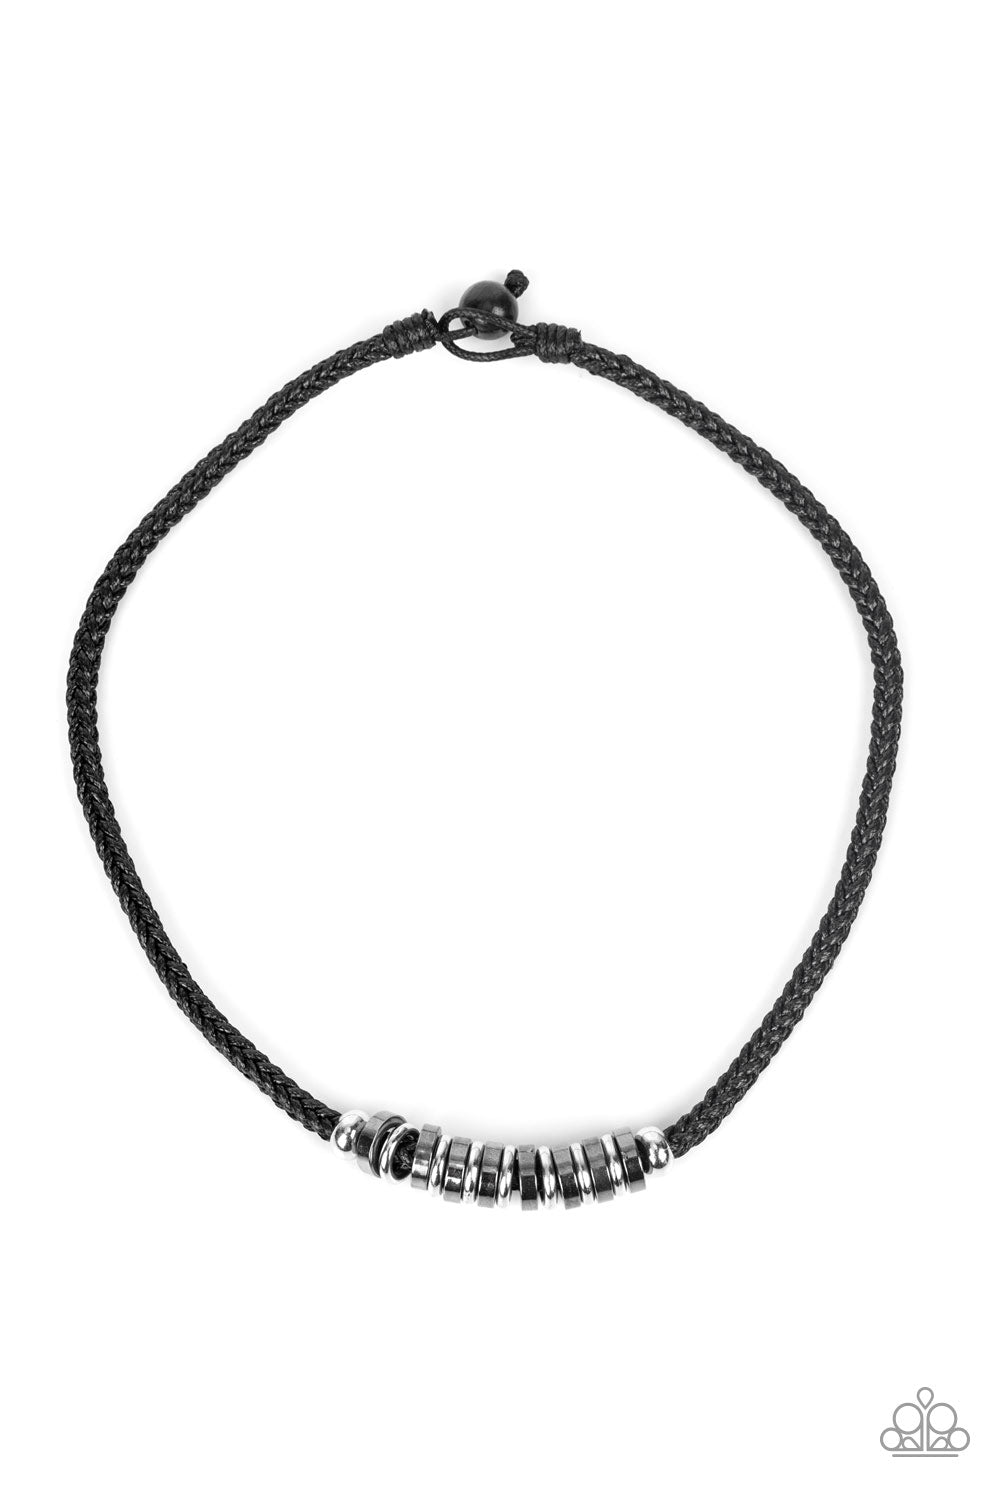 Primitive Prize - Black Necklace